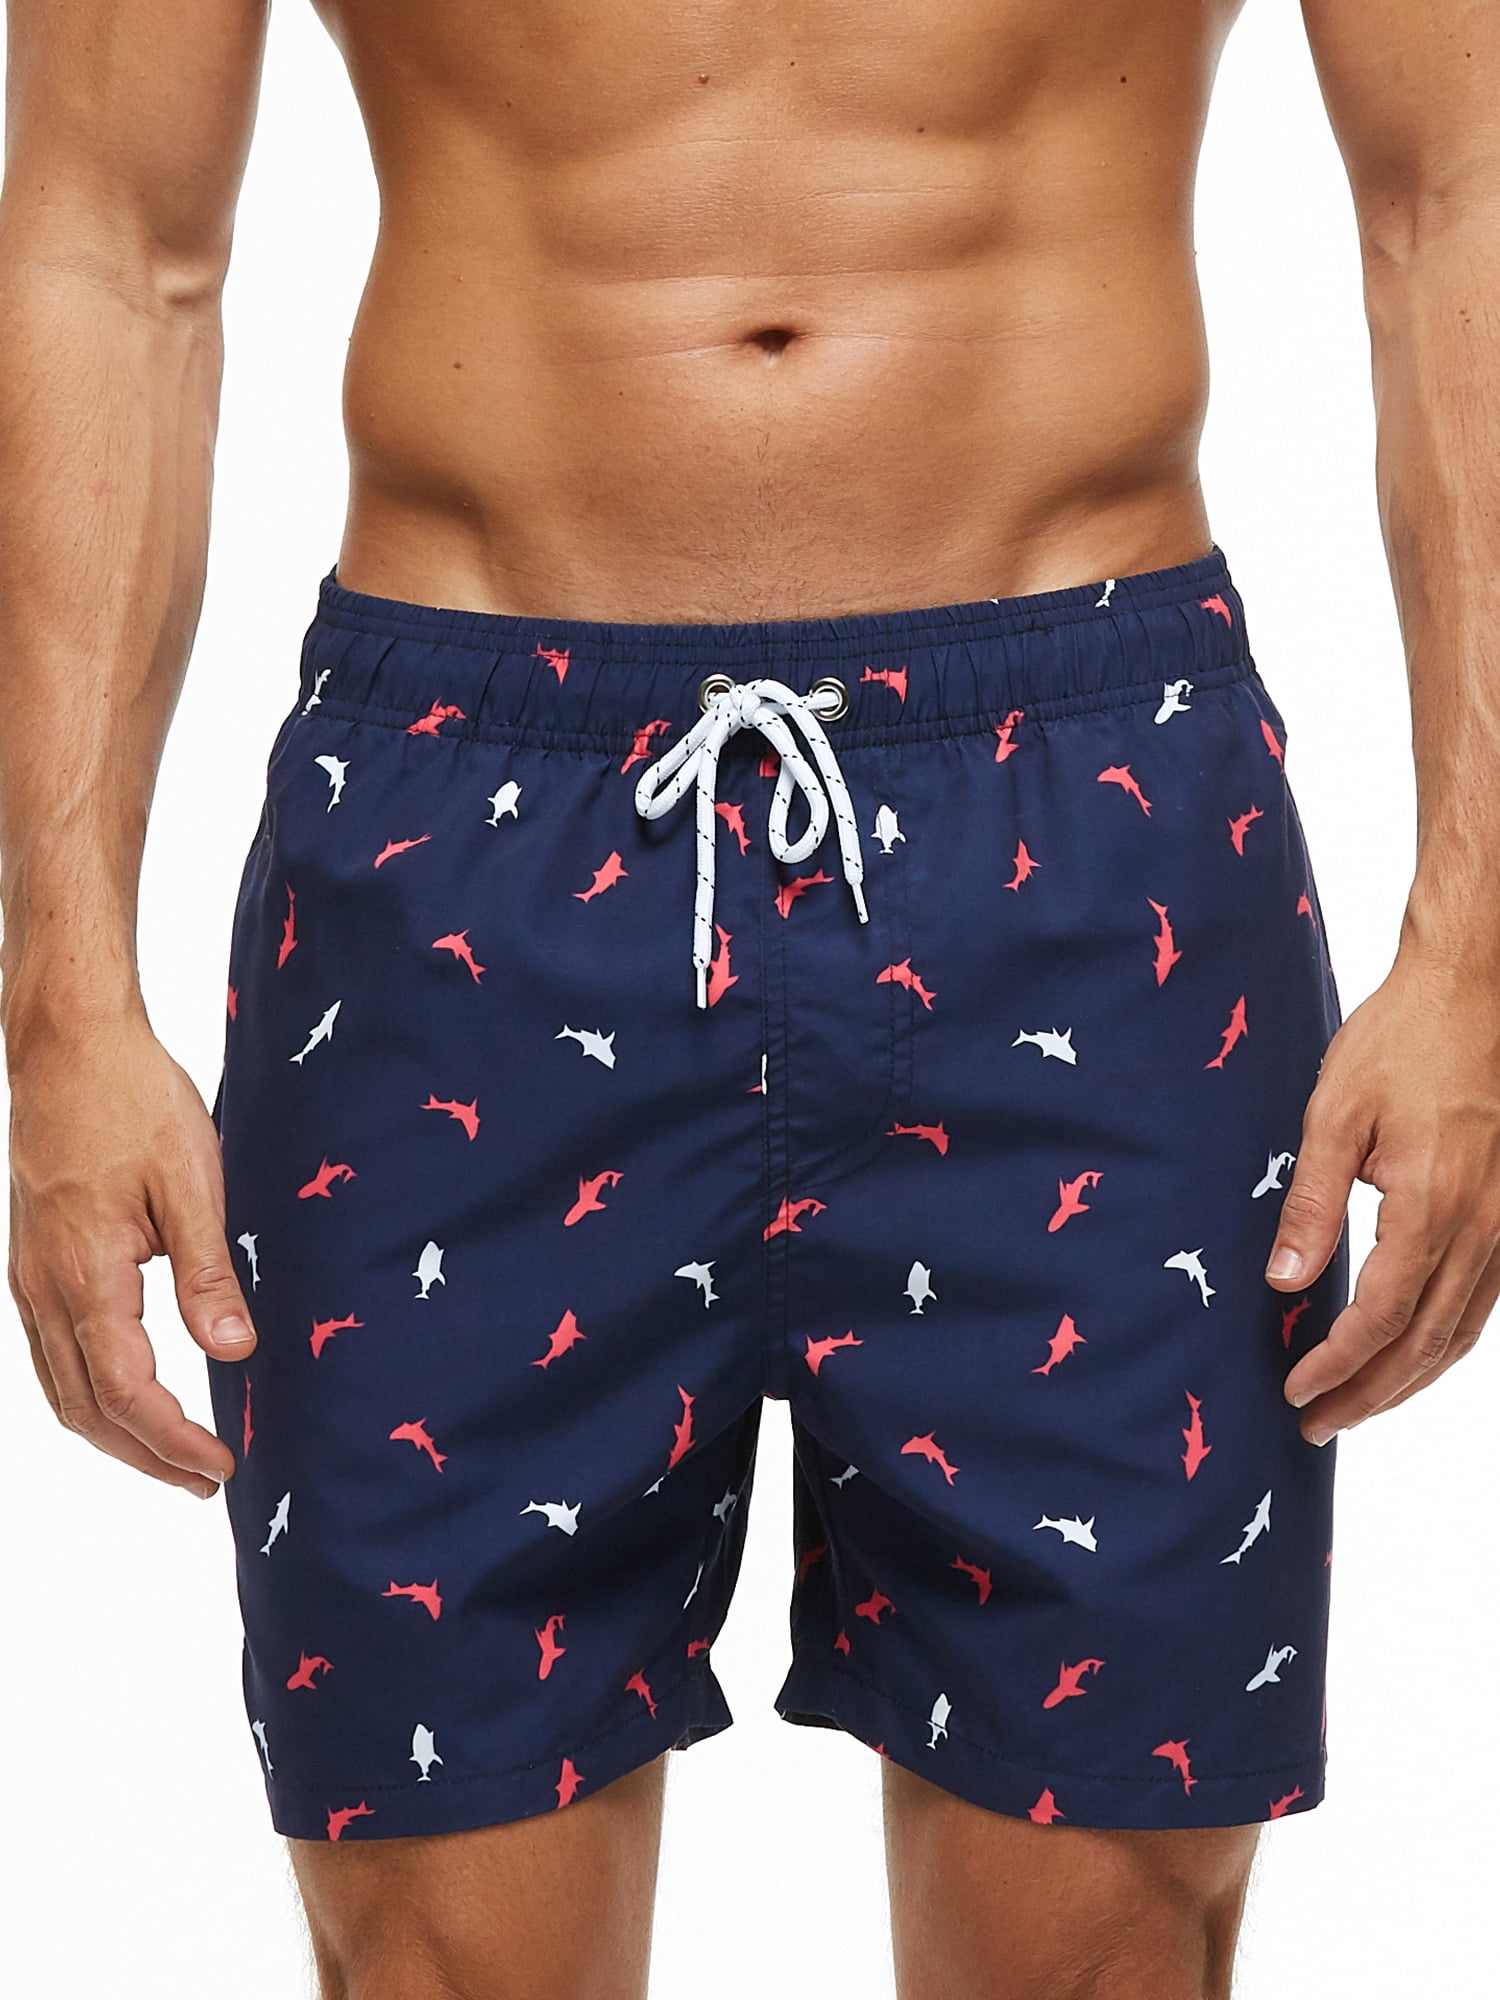 KPILP Men Plus Size Quick Dry Breathable Swimming Shorts Swim Trunks Solid Swimwear Beach Slim Wear Pants 